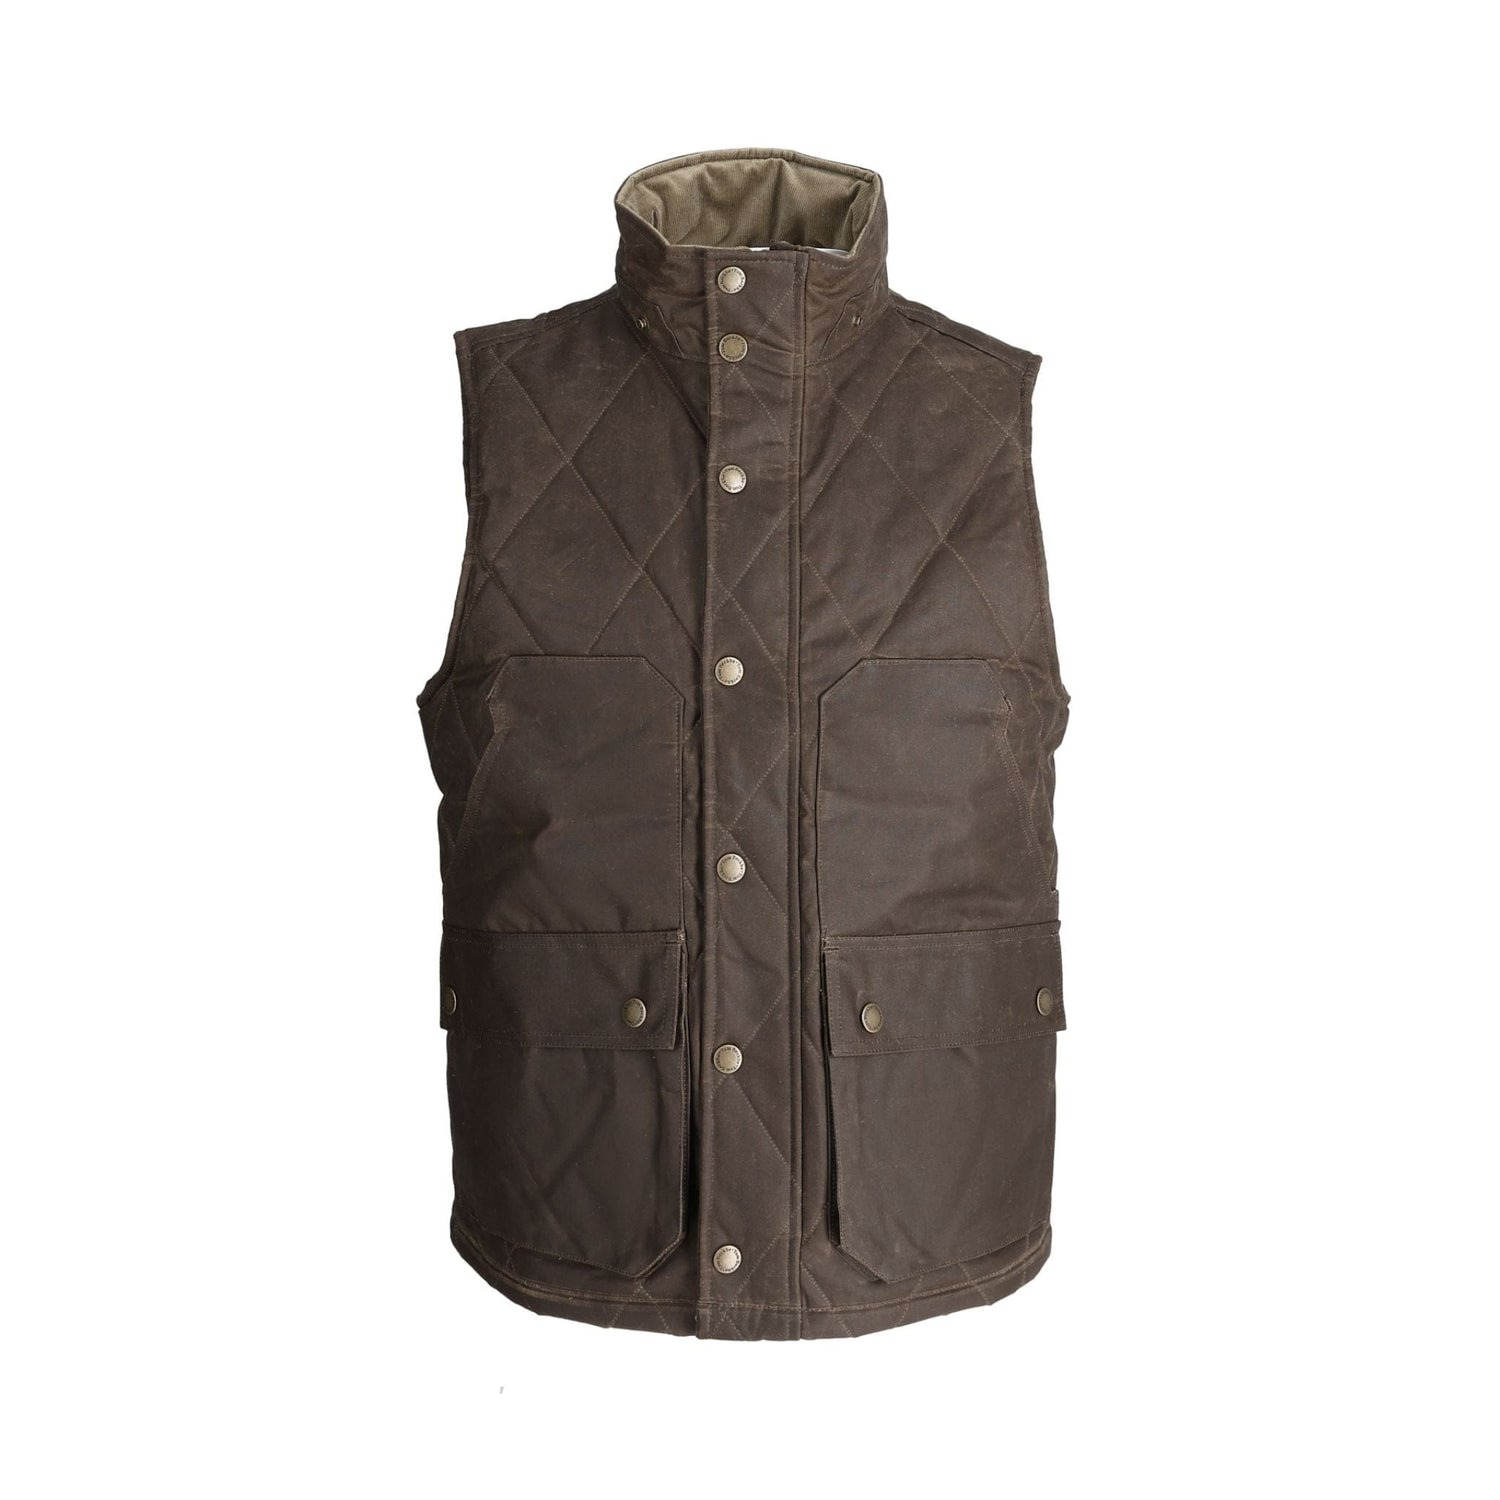 Man Vest Leather sleeveless gilet jacket soft leather brown Gilet